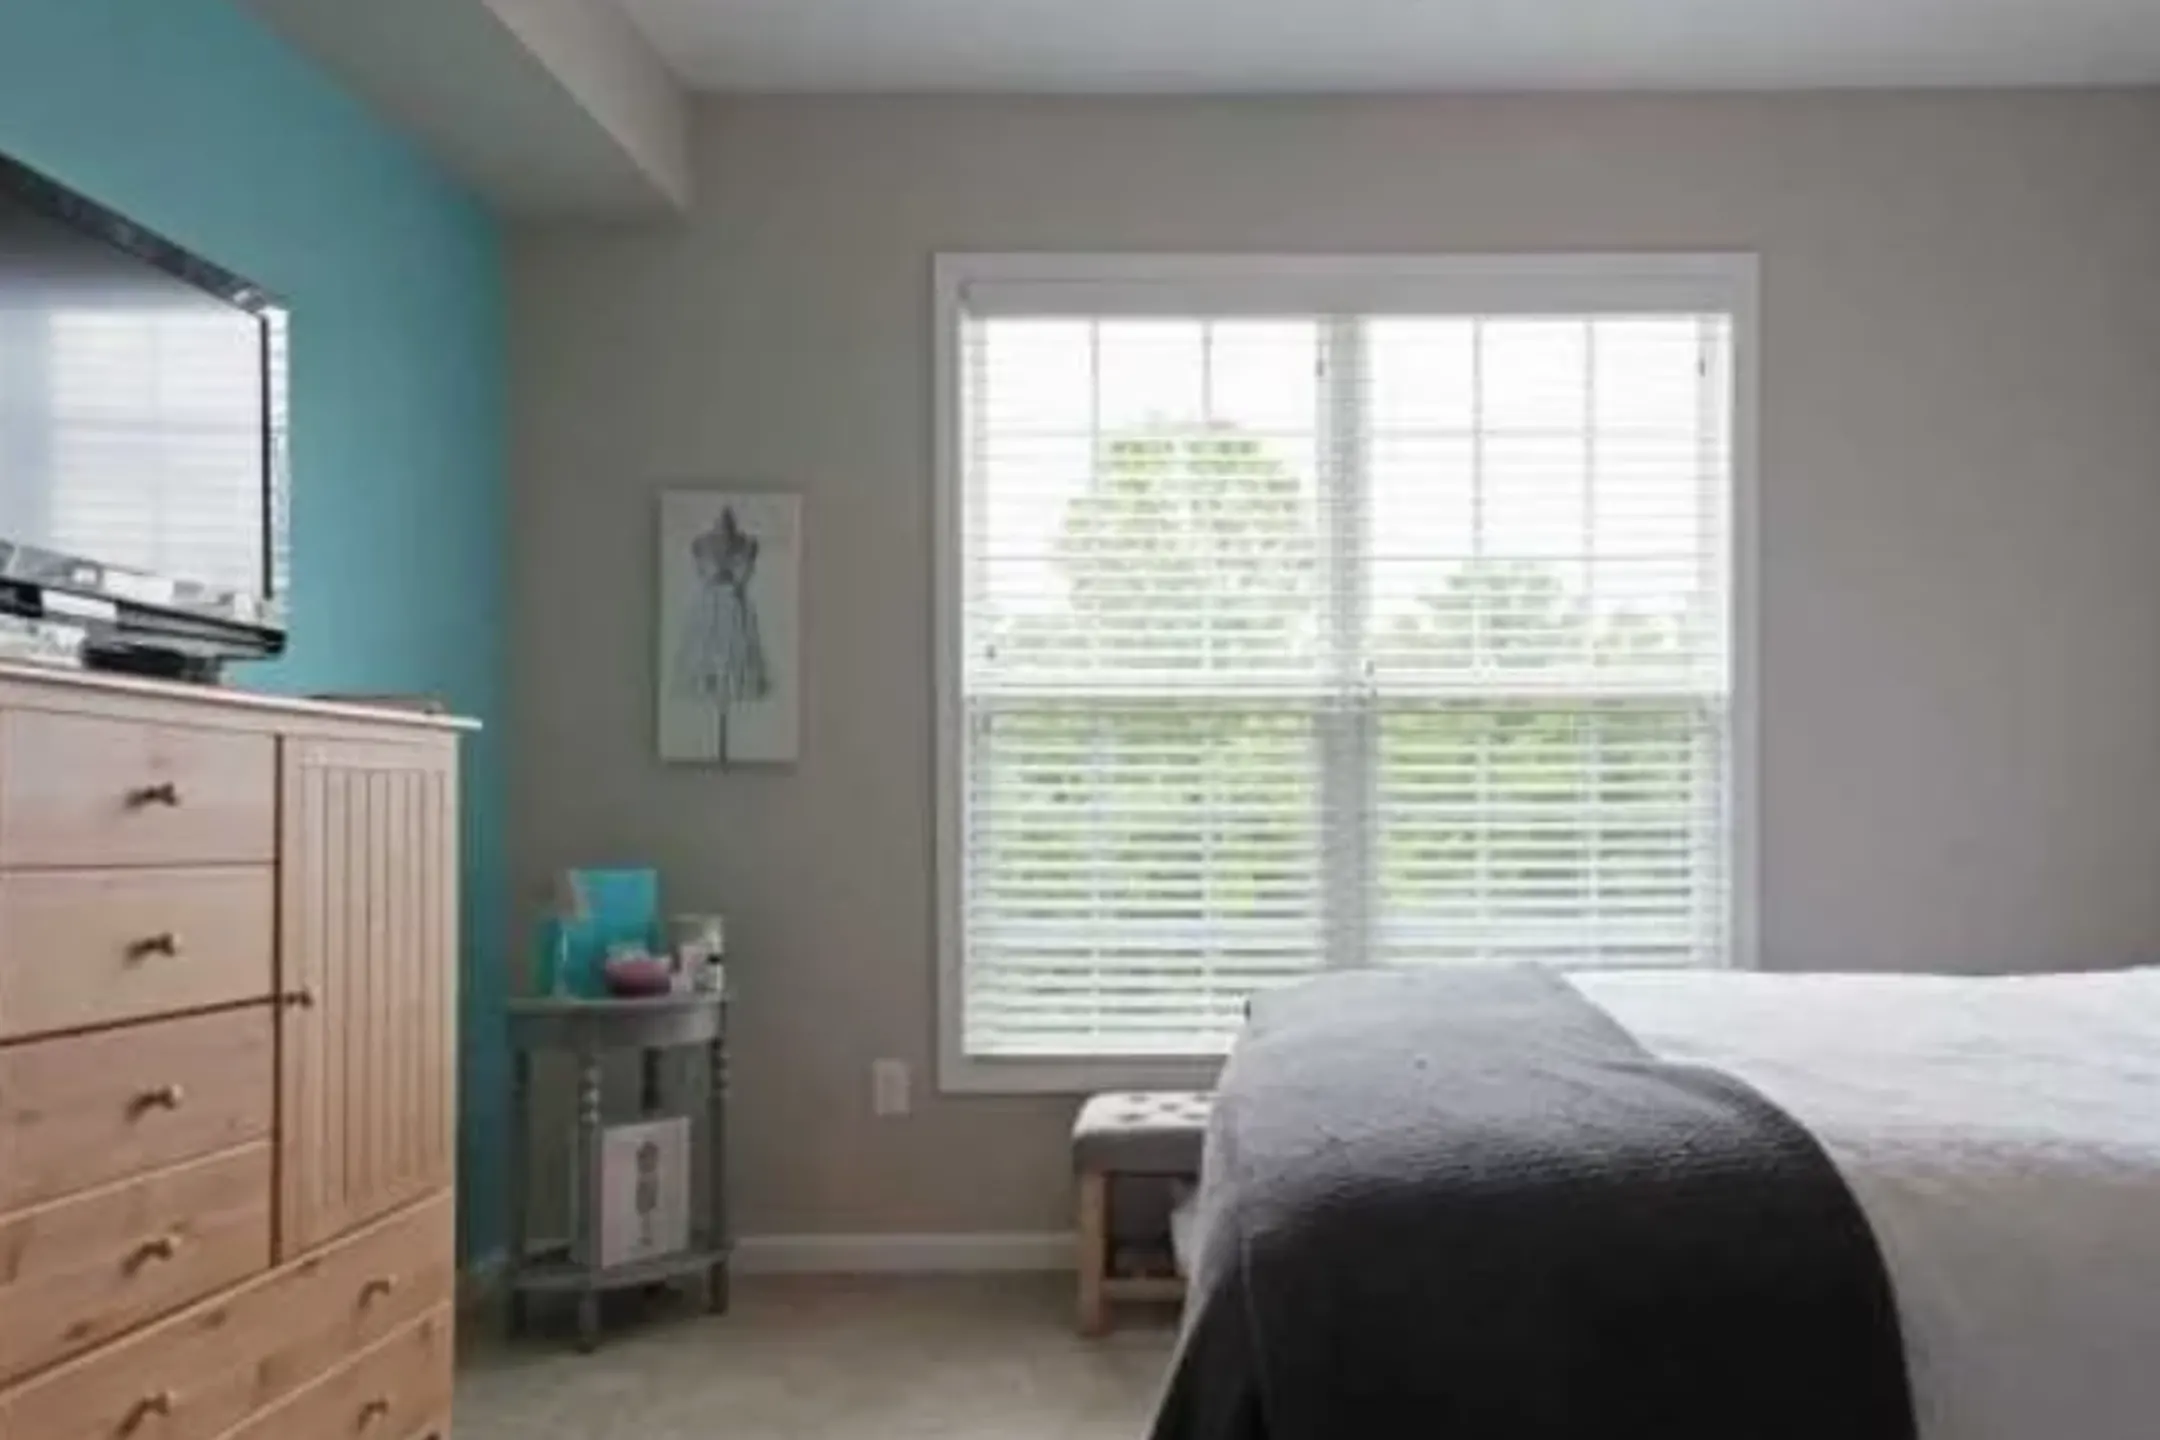 Bedroom - The Aspen Apartments - Roanoke, VA